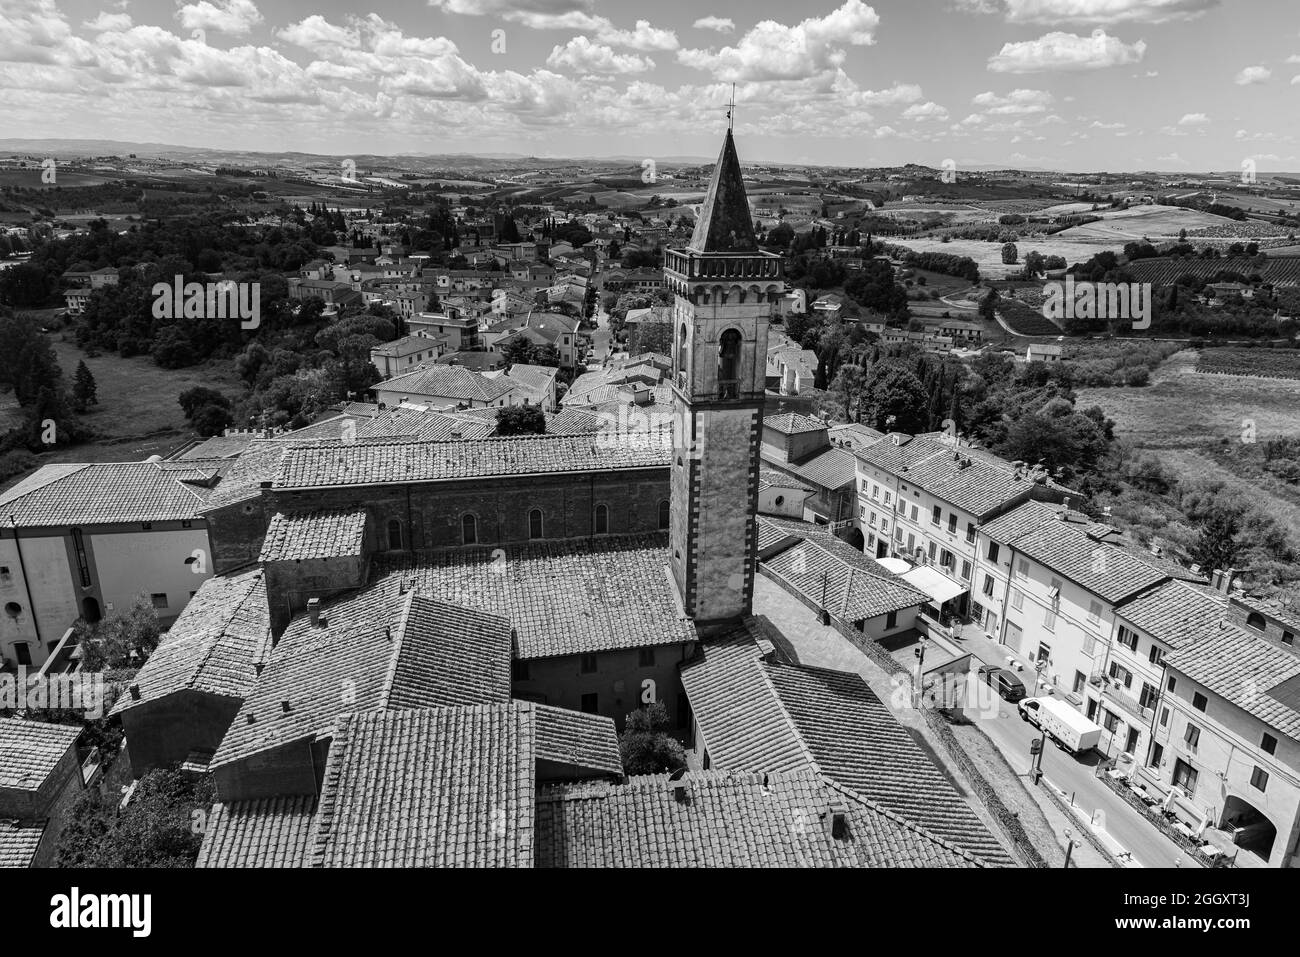 Vinci è una città italiana di 14 615 abitanti nella città metropolitana di  Firenze, in Toscana. È noto che è stato il luogo di origine di Leona Foto  stock - Alamy